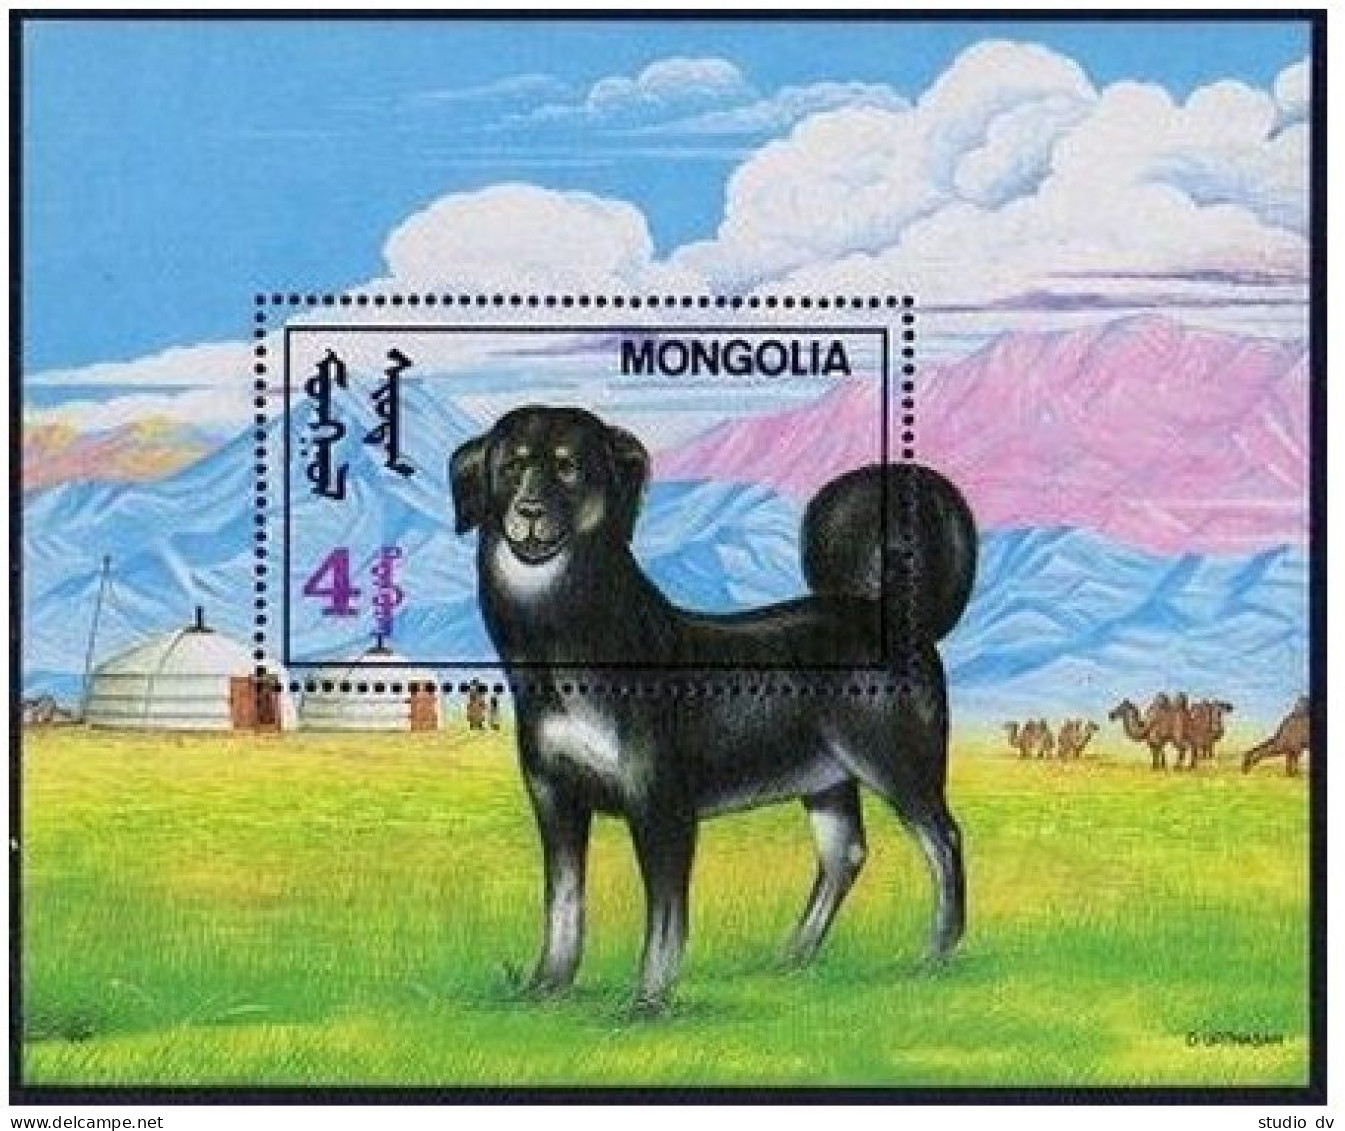 Mongolia 2045-2051, 2052 Sheet, MNH. Michel 2320-2326, Bl.175. Dogs 1991. - Mongolia